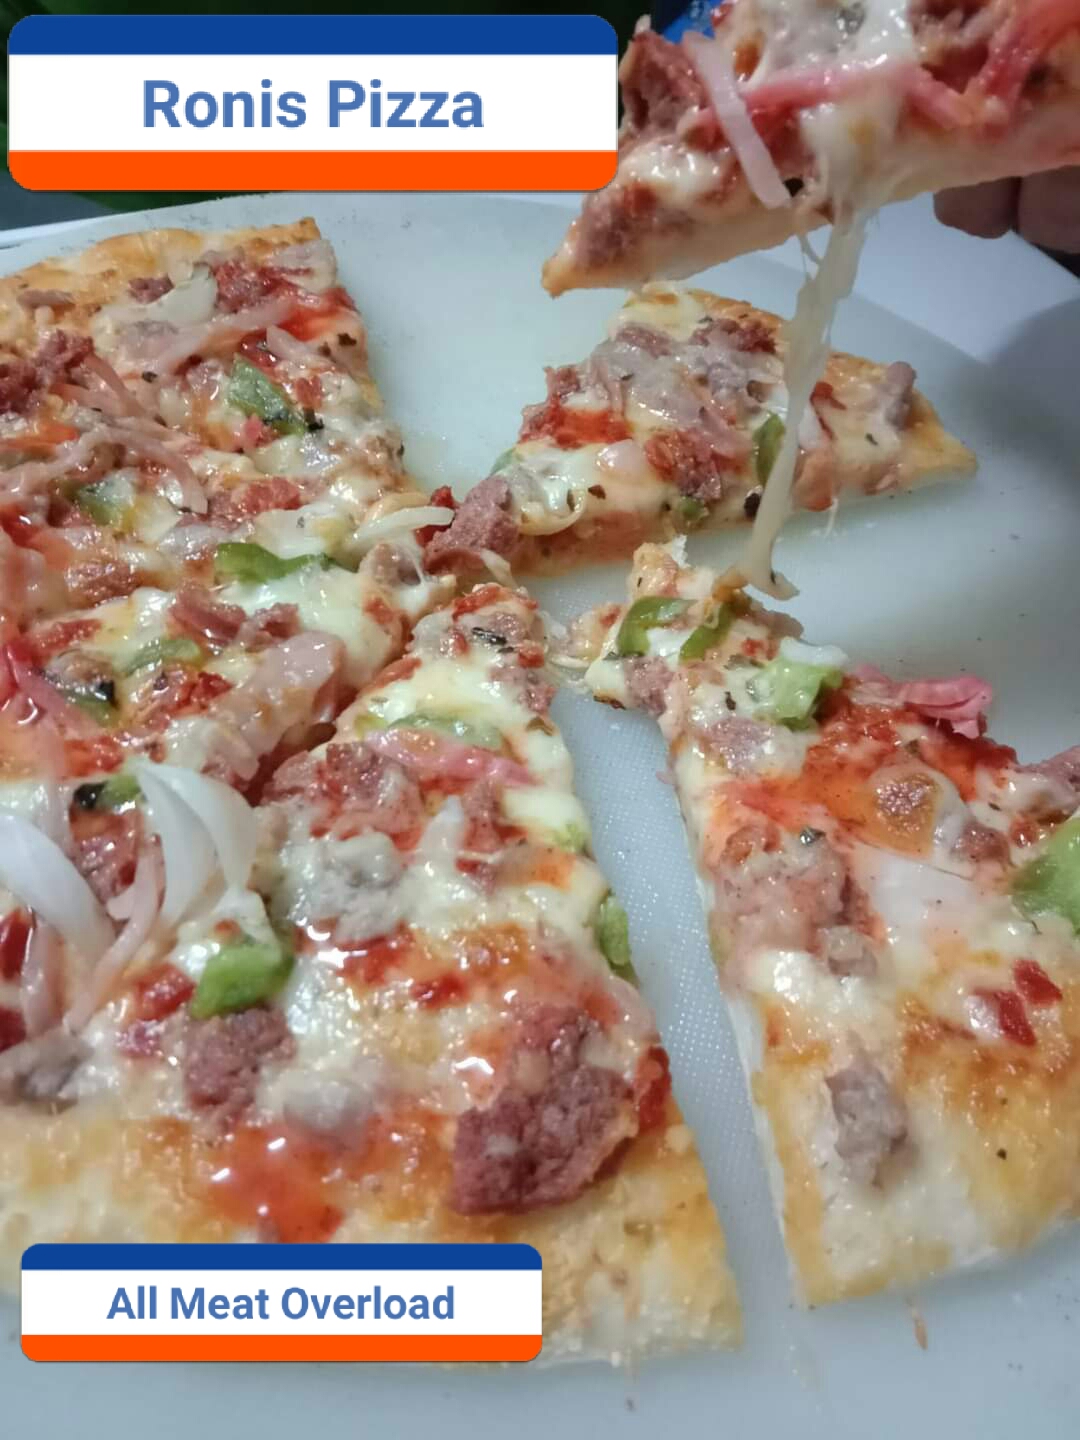 Ronis Pizza